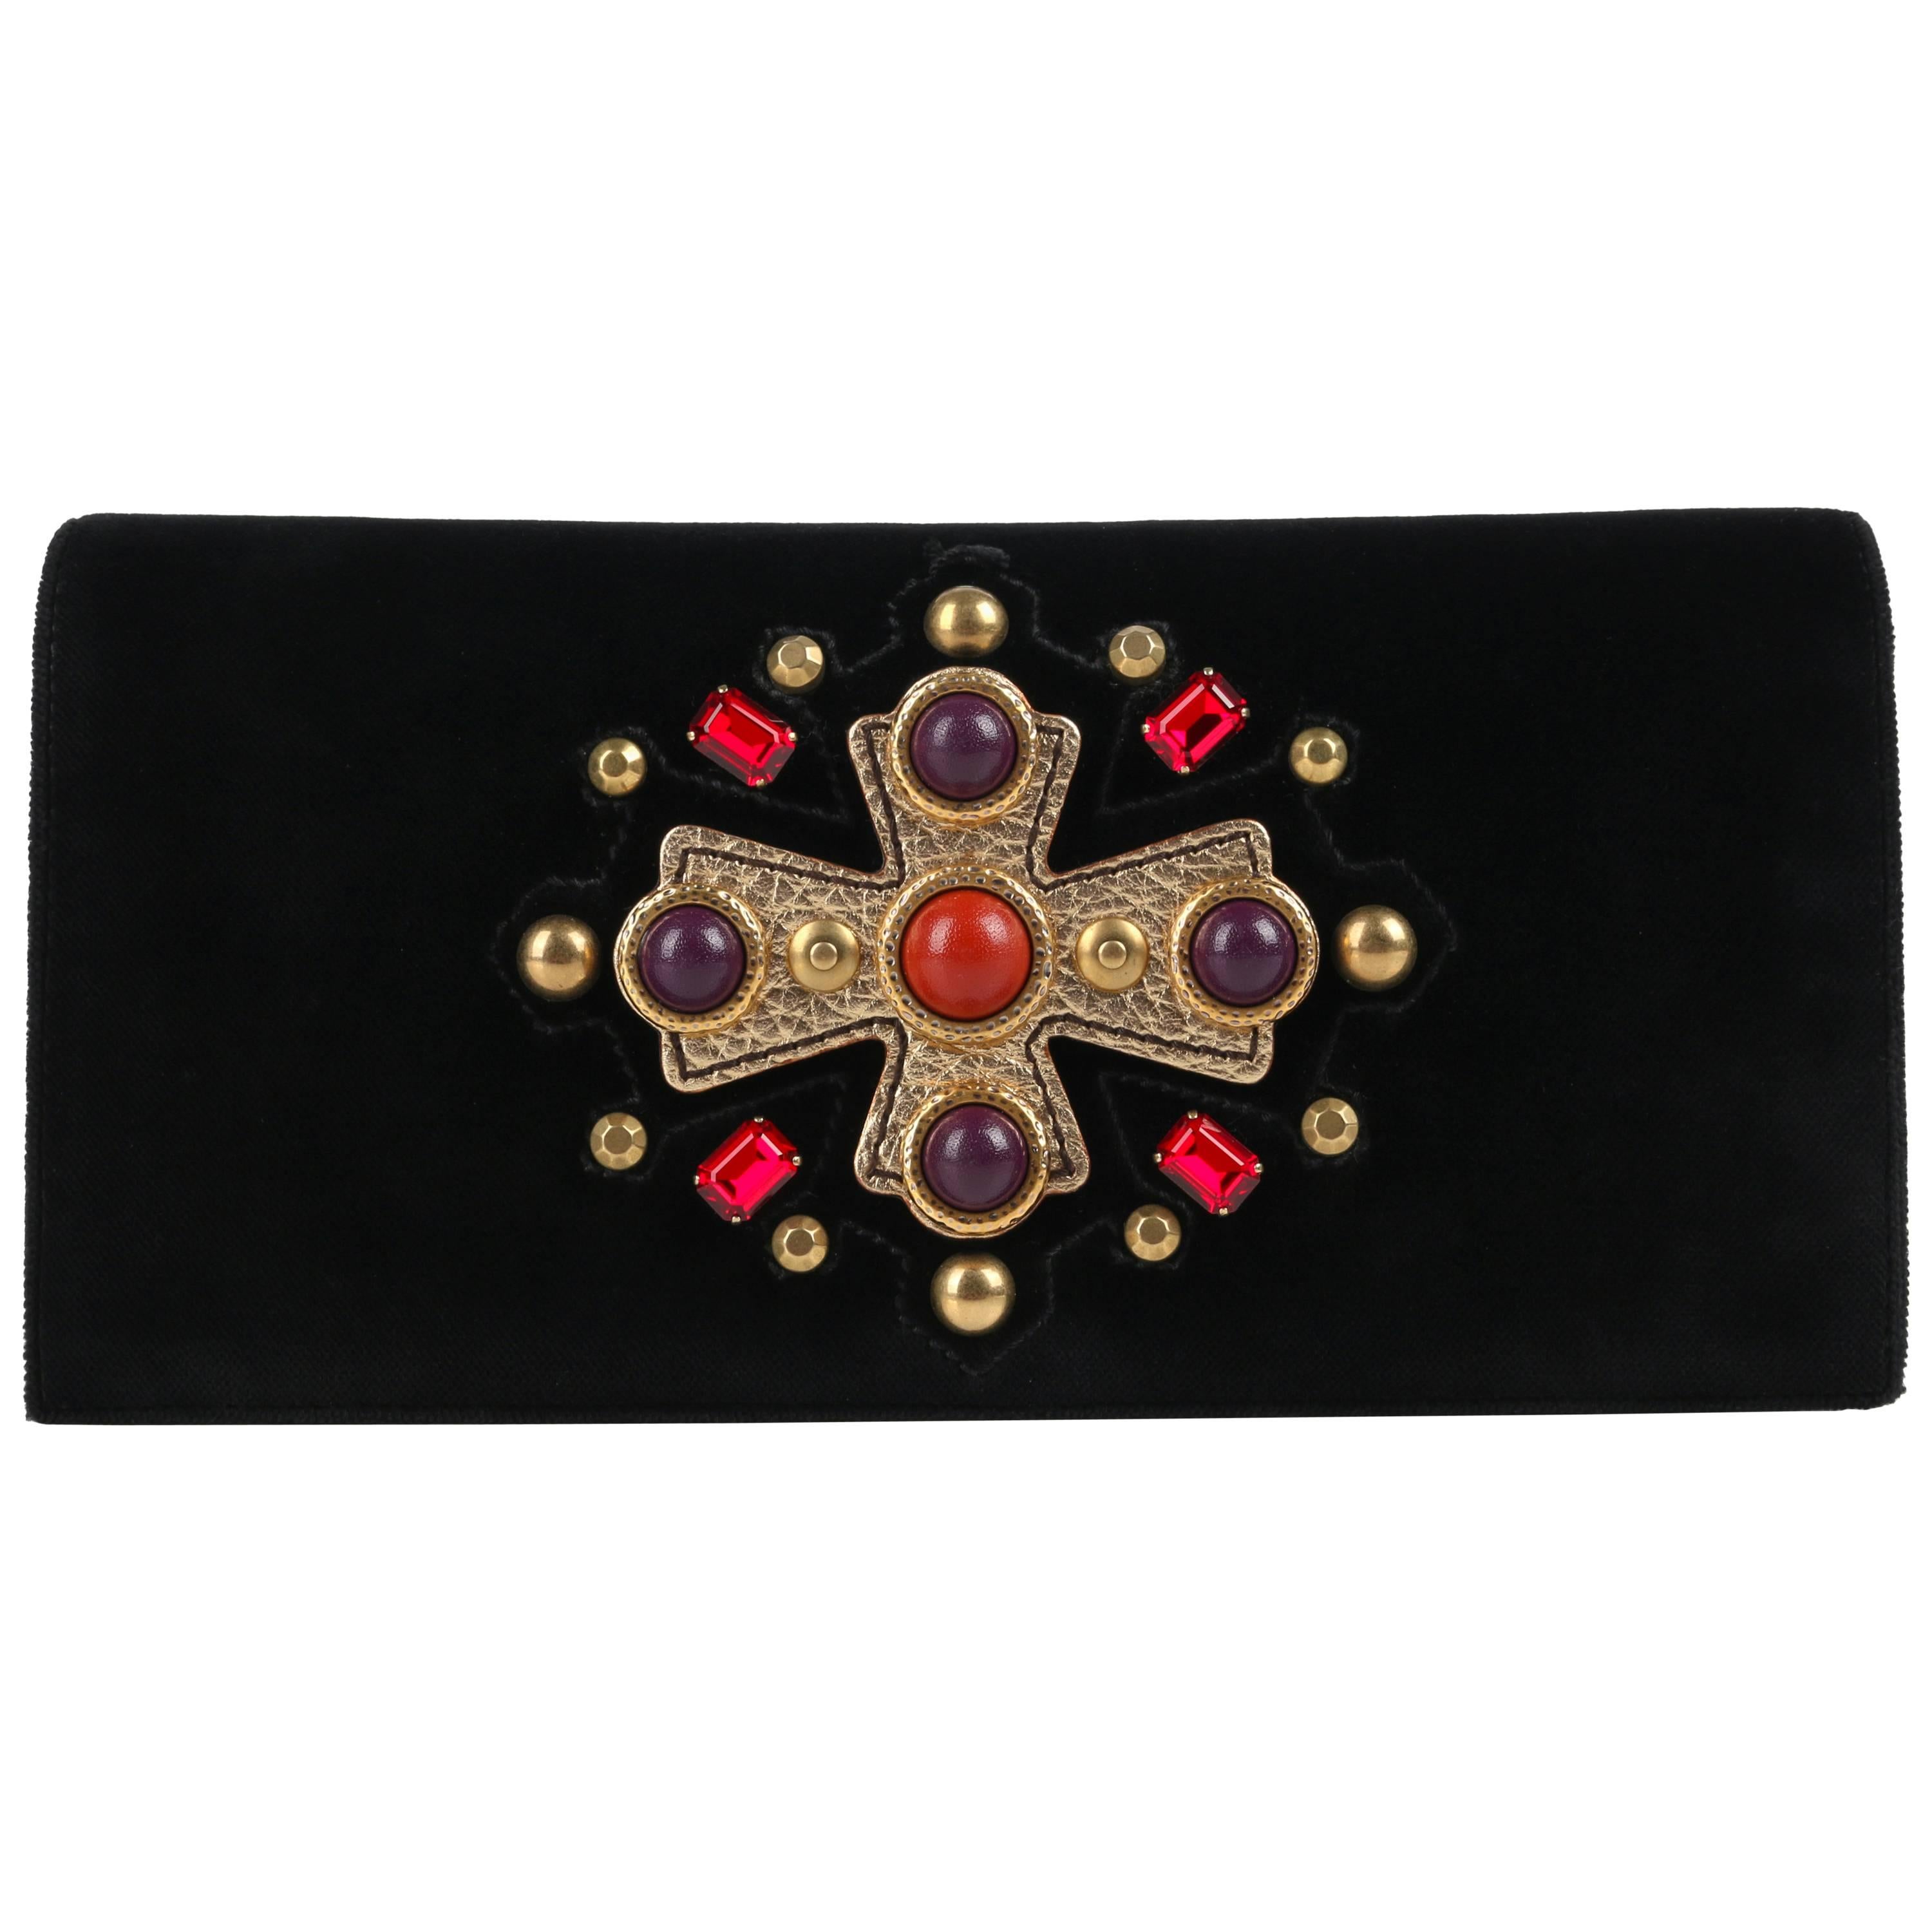 YVES SAINT LAURENT YSL 2005 Collection "Jeweled Sac Venise" Clutch Handbag Purse